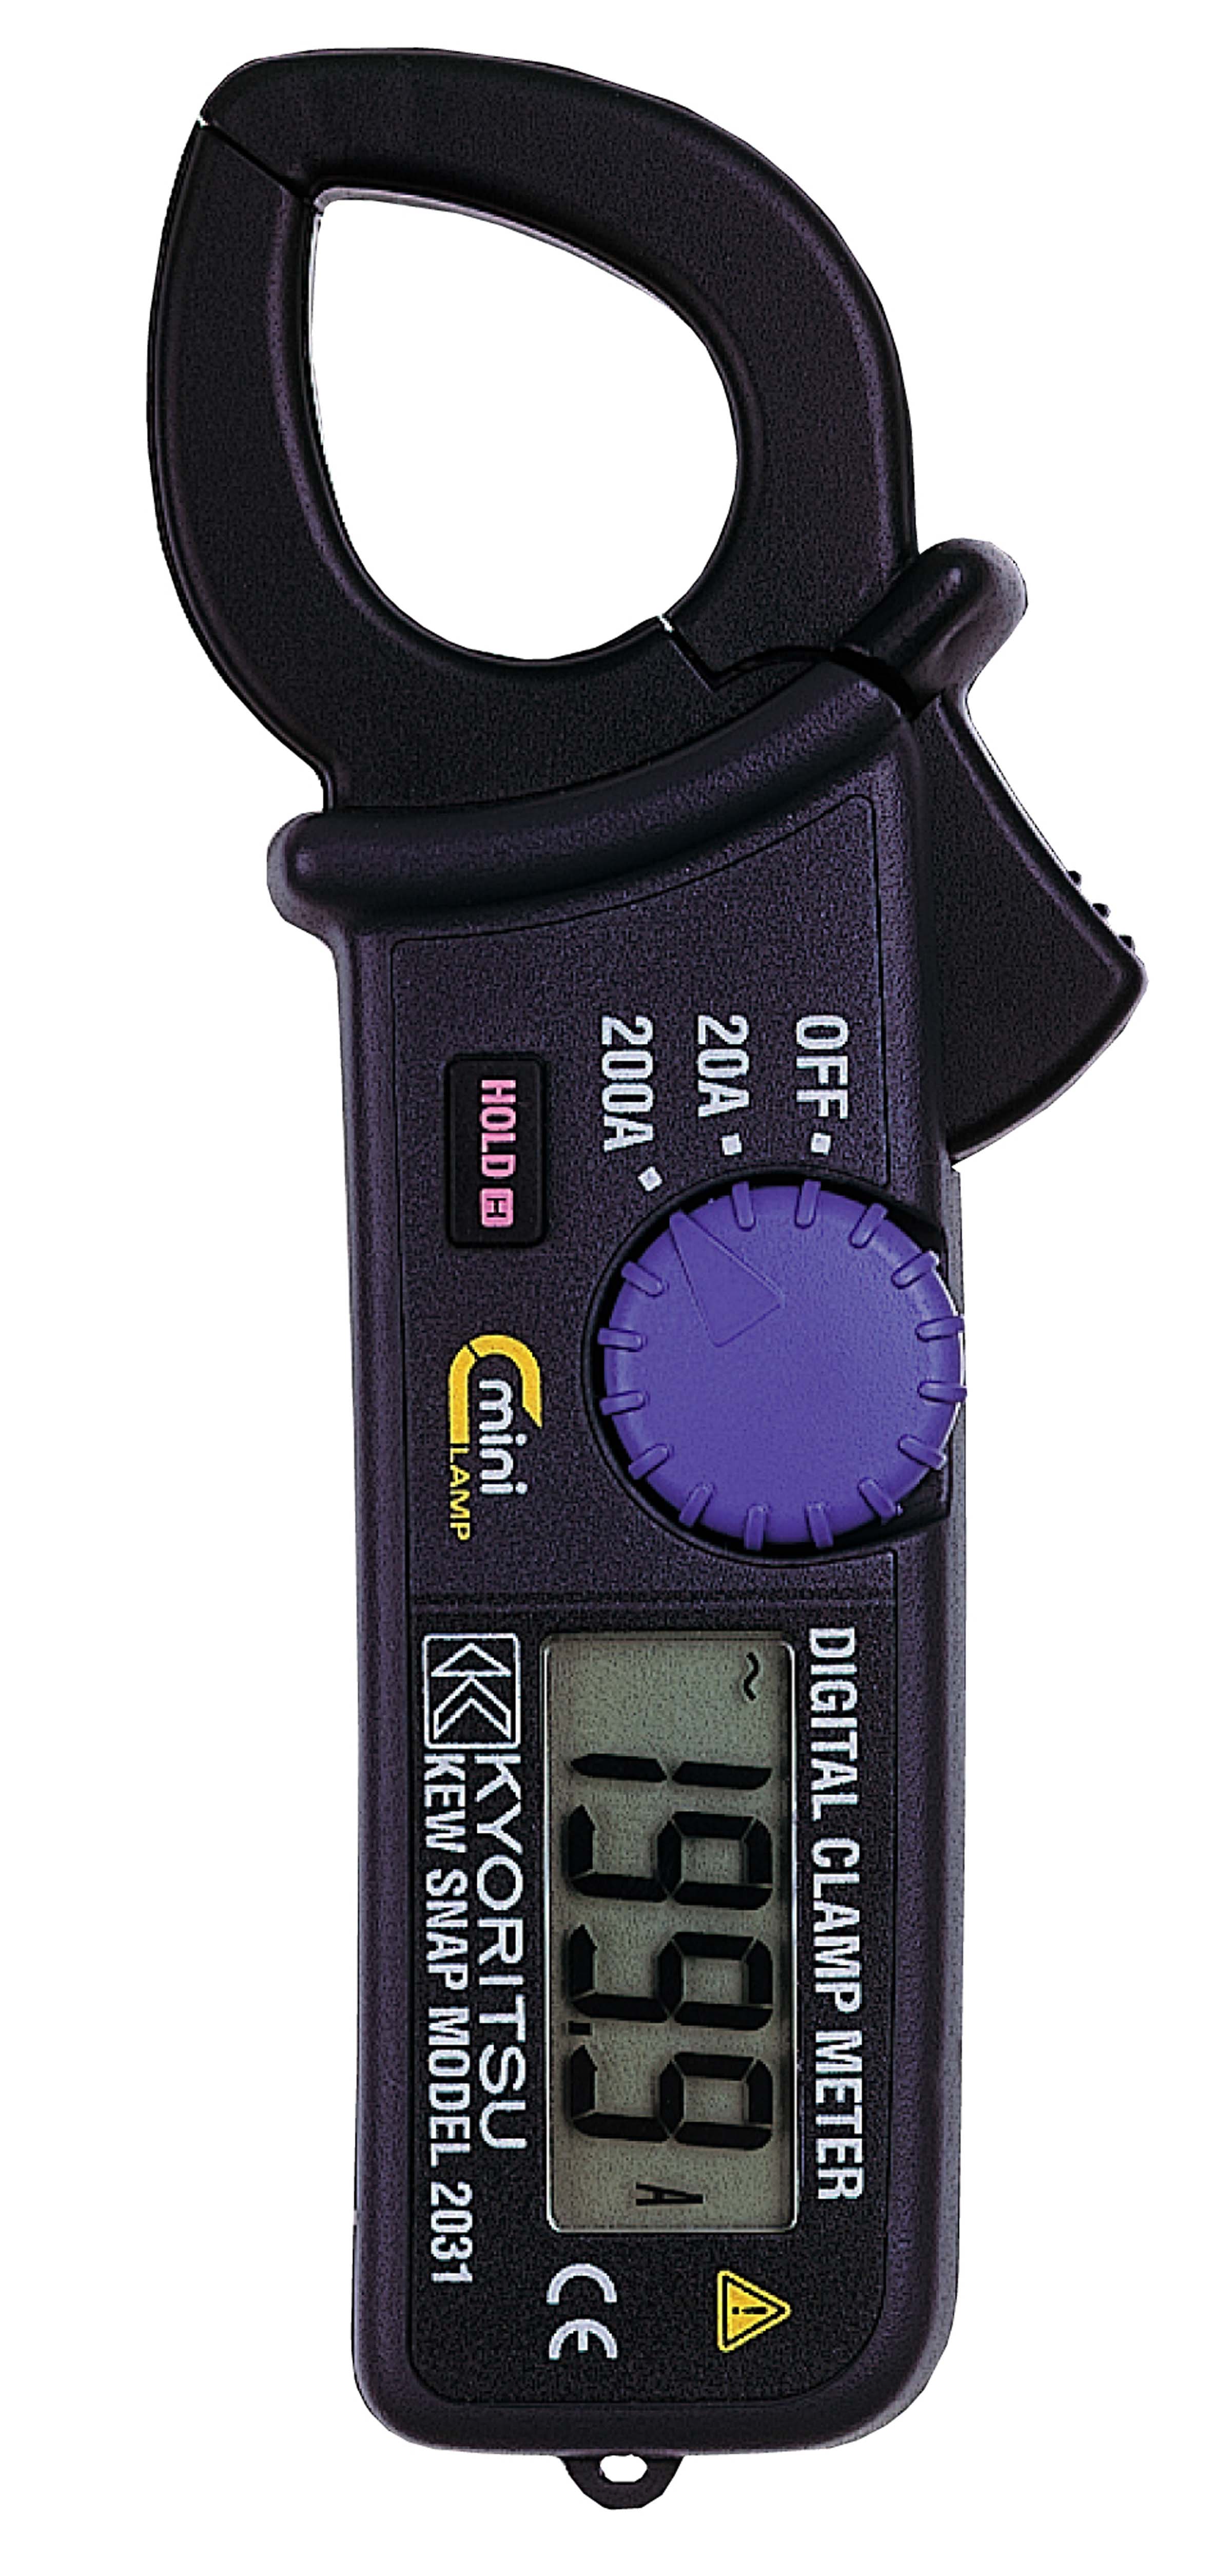 共立電気計器 交流電流・直流電流測定用クランプメータ RMS KEW 2056R 共立 測定 電気 計測 計測器 測定器 - 3